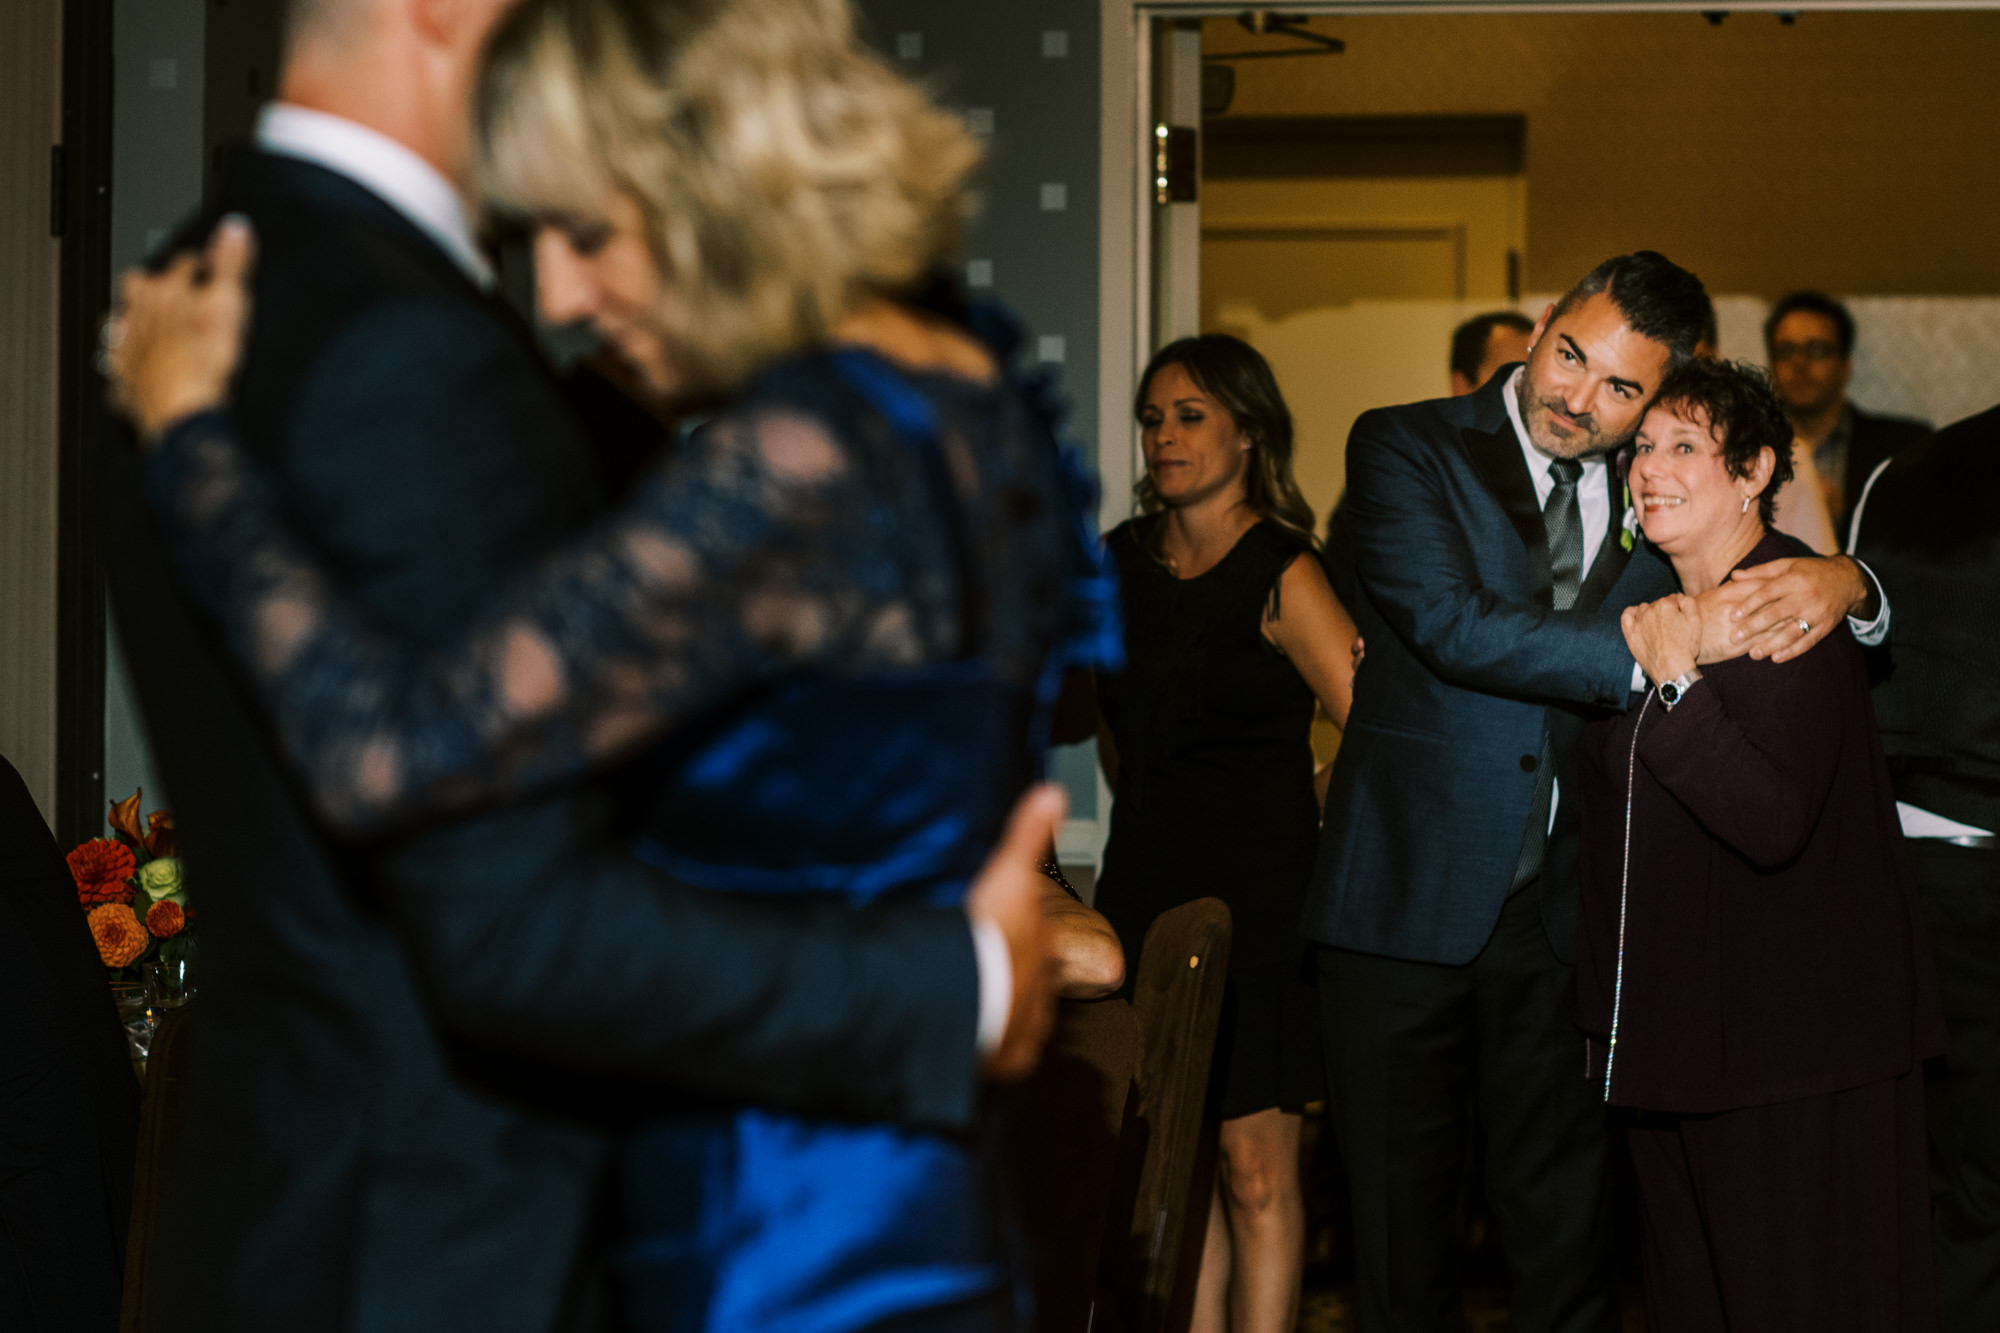 Alexis Royal Sonesta Hotel Hotel wedding: Michael and Justin formal dances